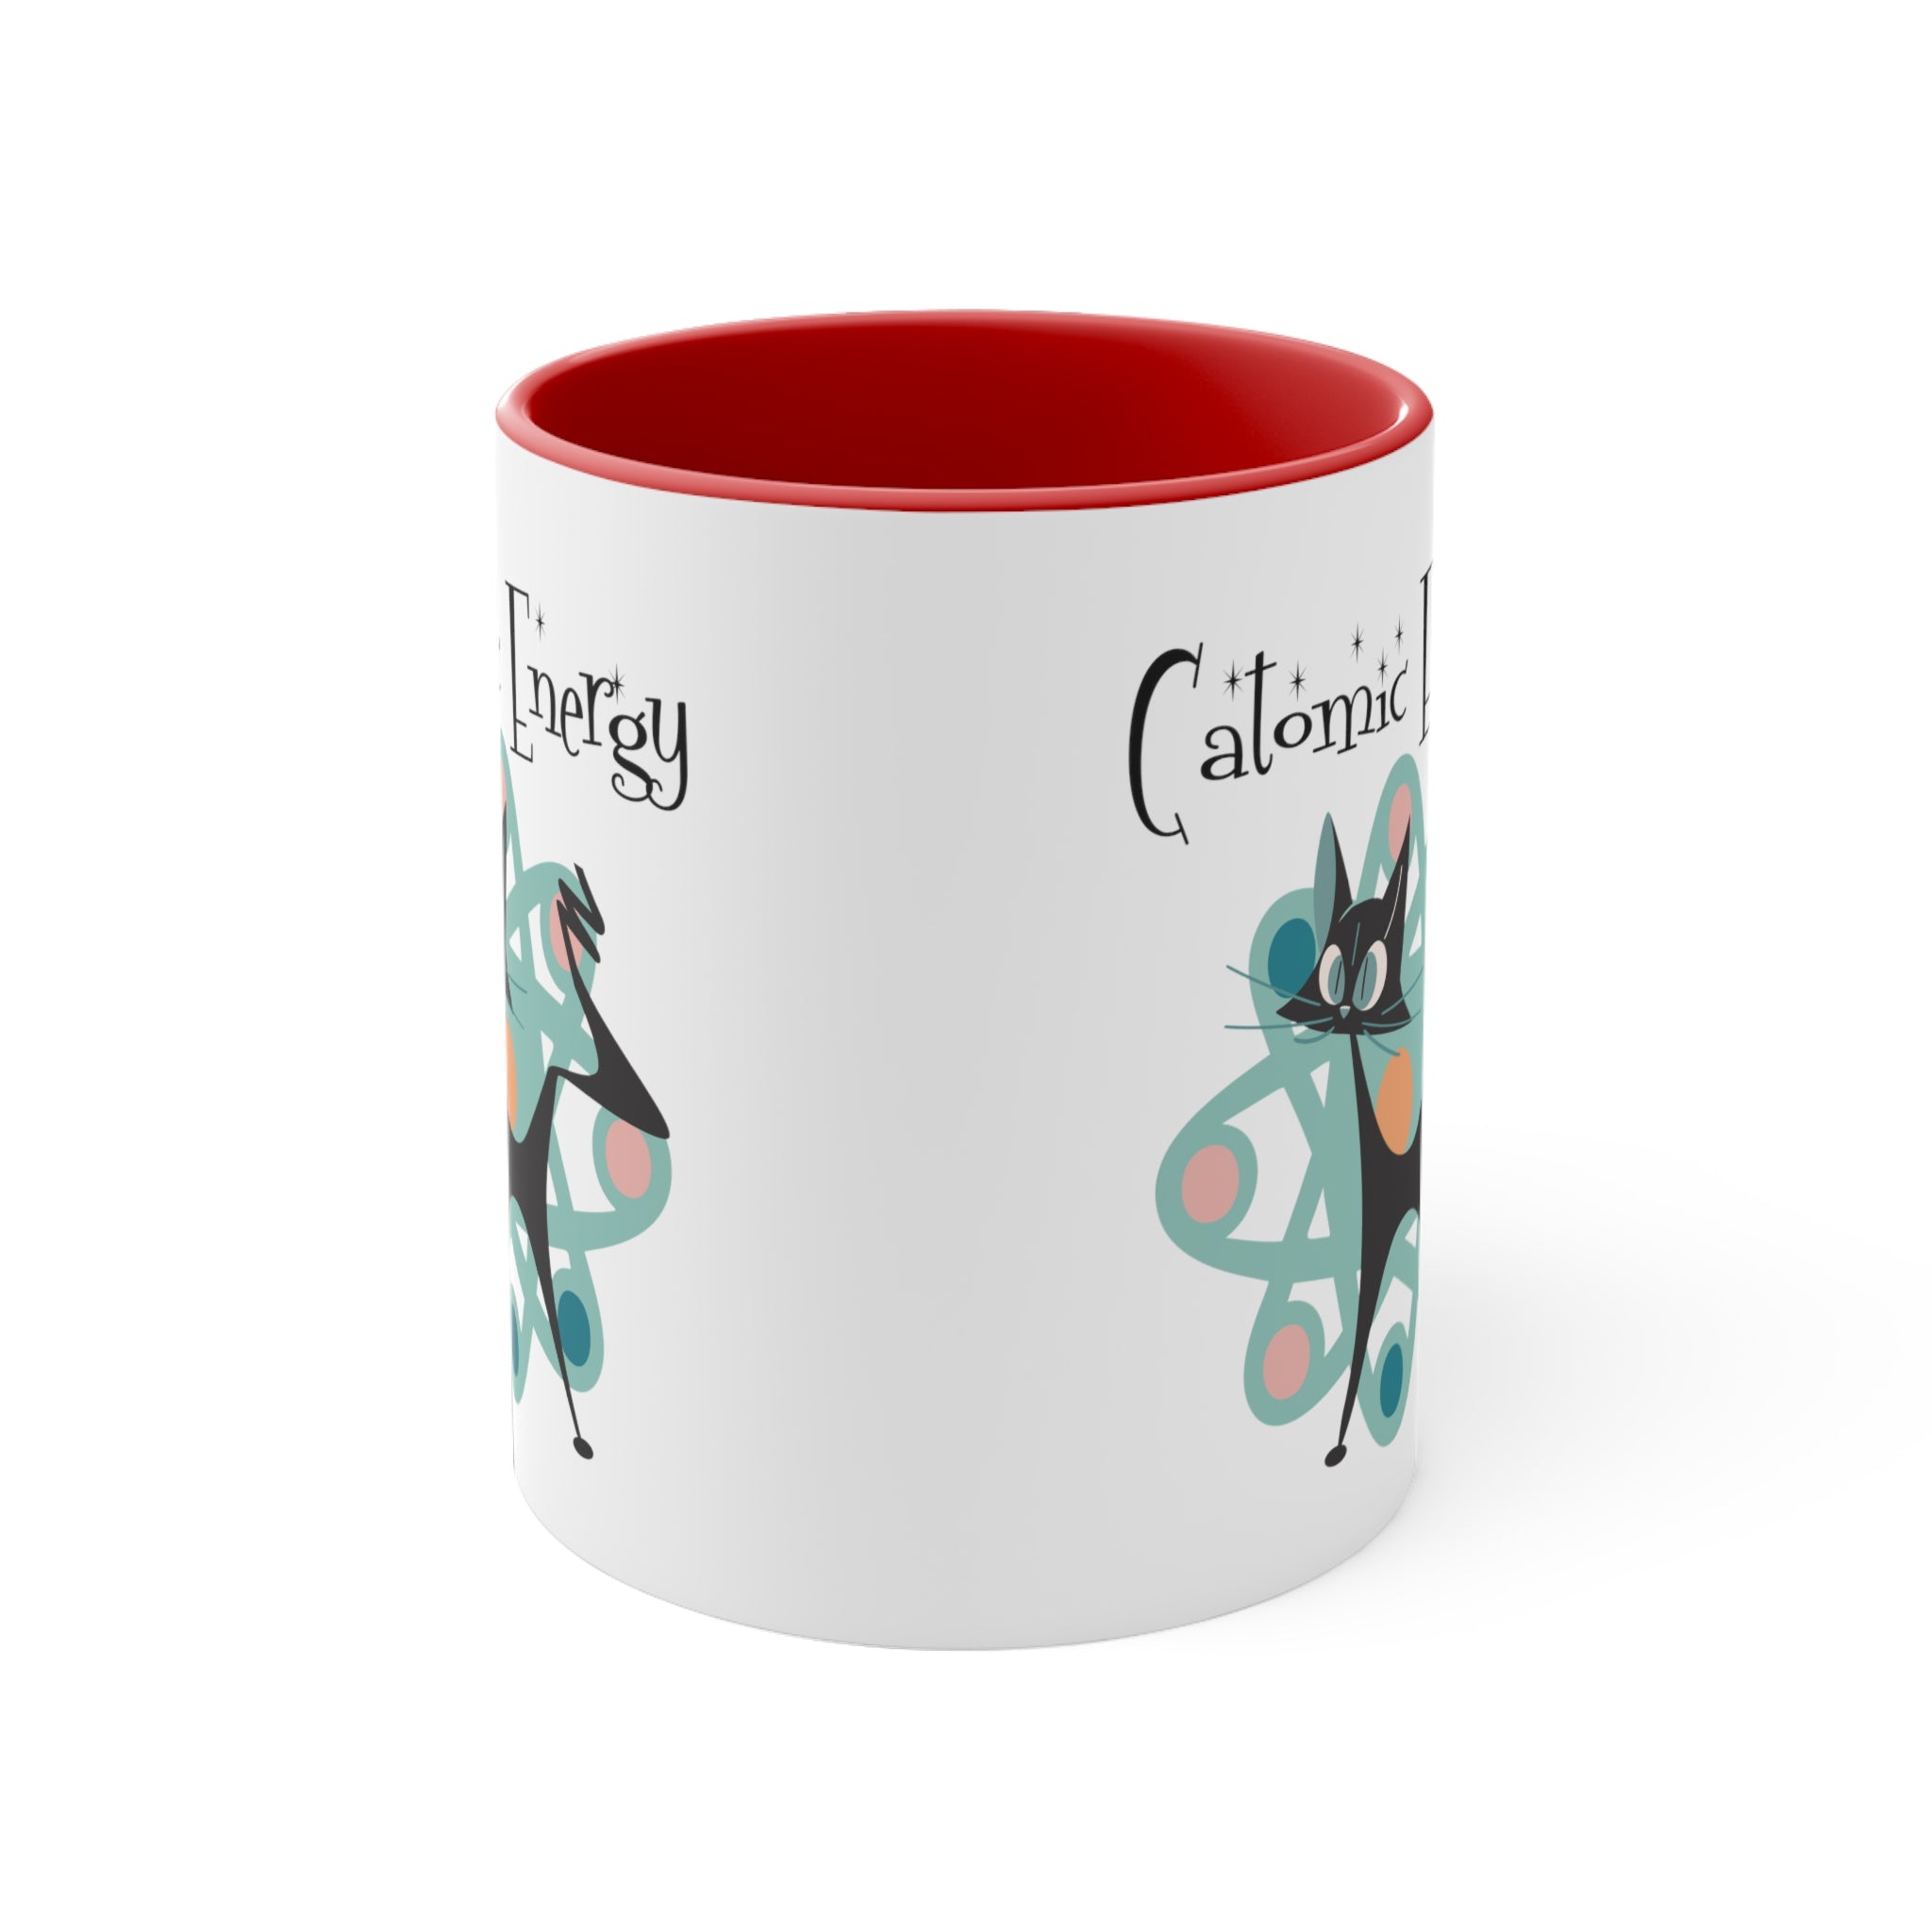 Atomic Cat Coffee Mug, Funny, Quirky Mid Century Modern Atom, Space Age Catomic Energy Coffee Lover Coffee Mug Gift